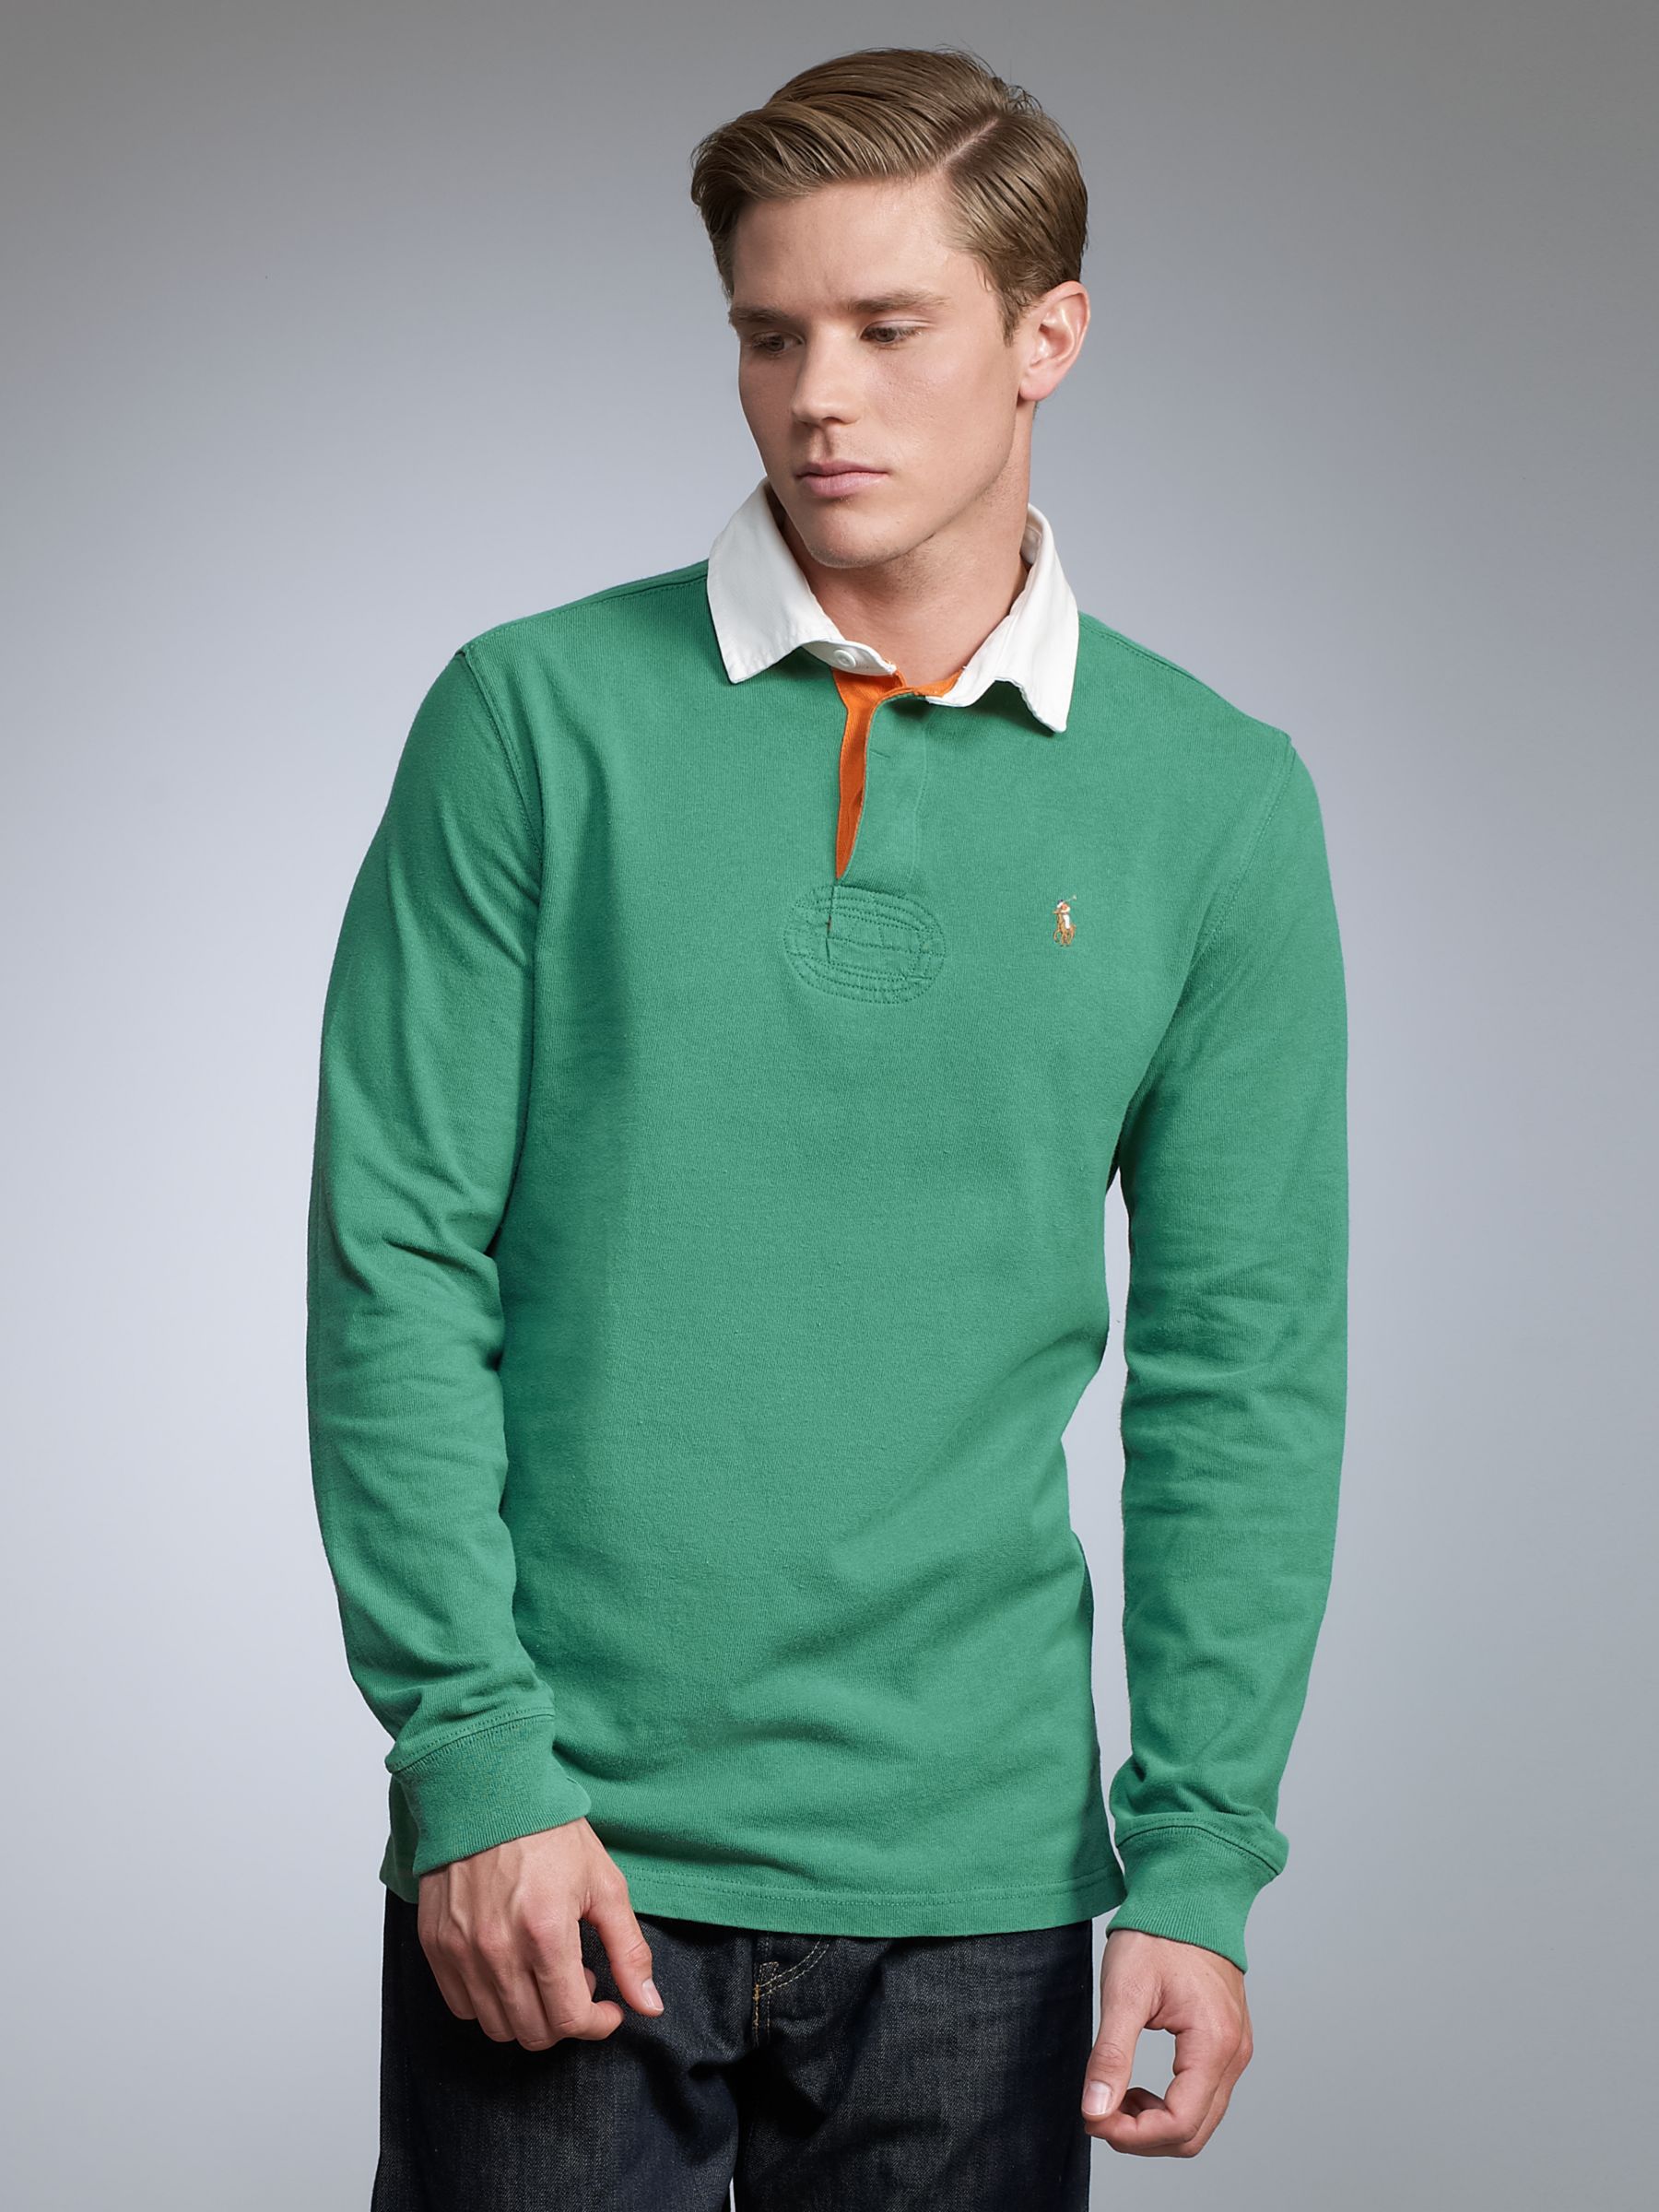 Custom Fit Rugby Shirt, Green